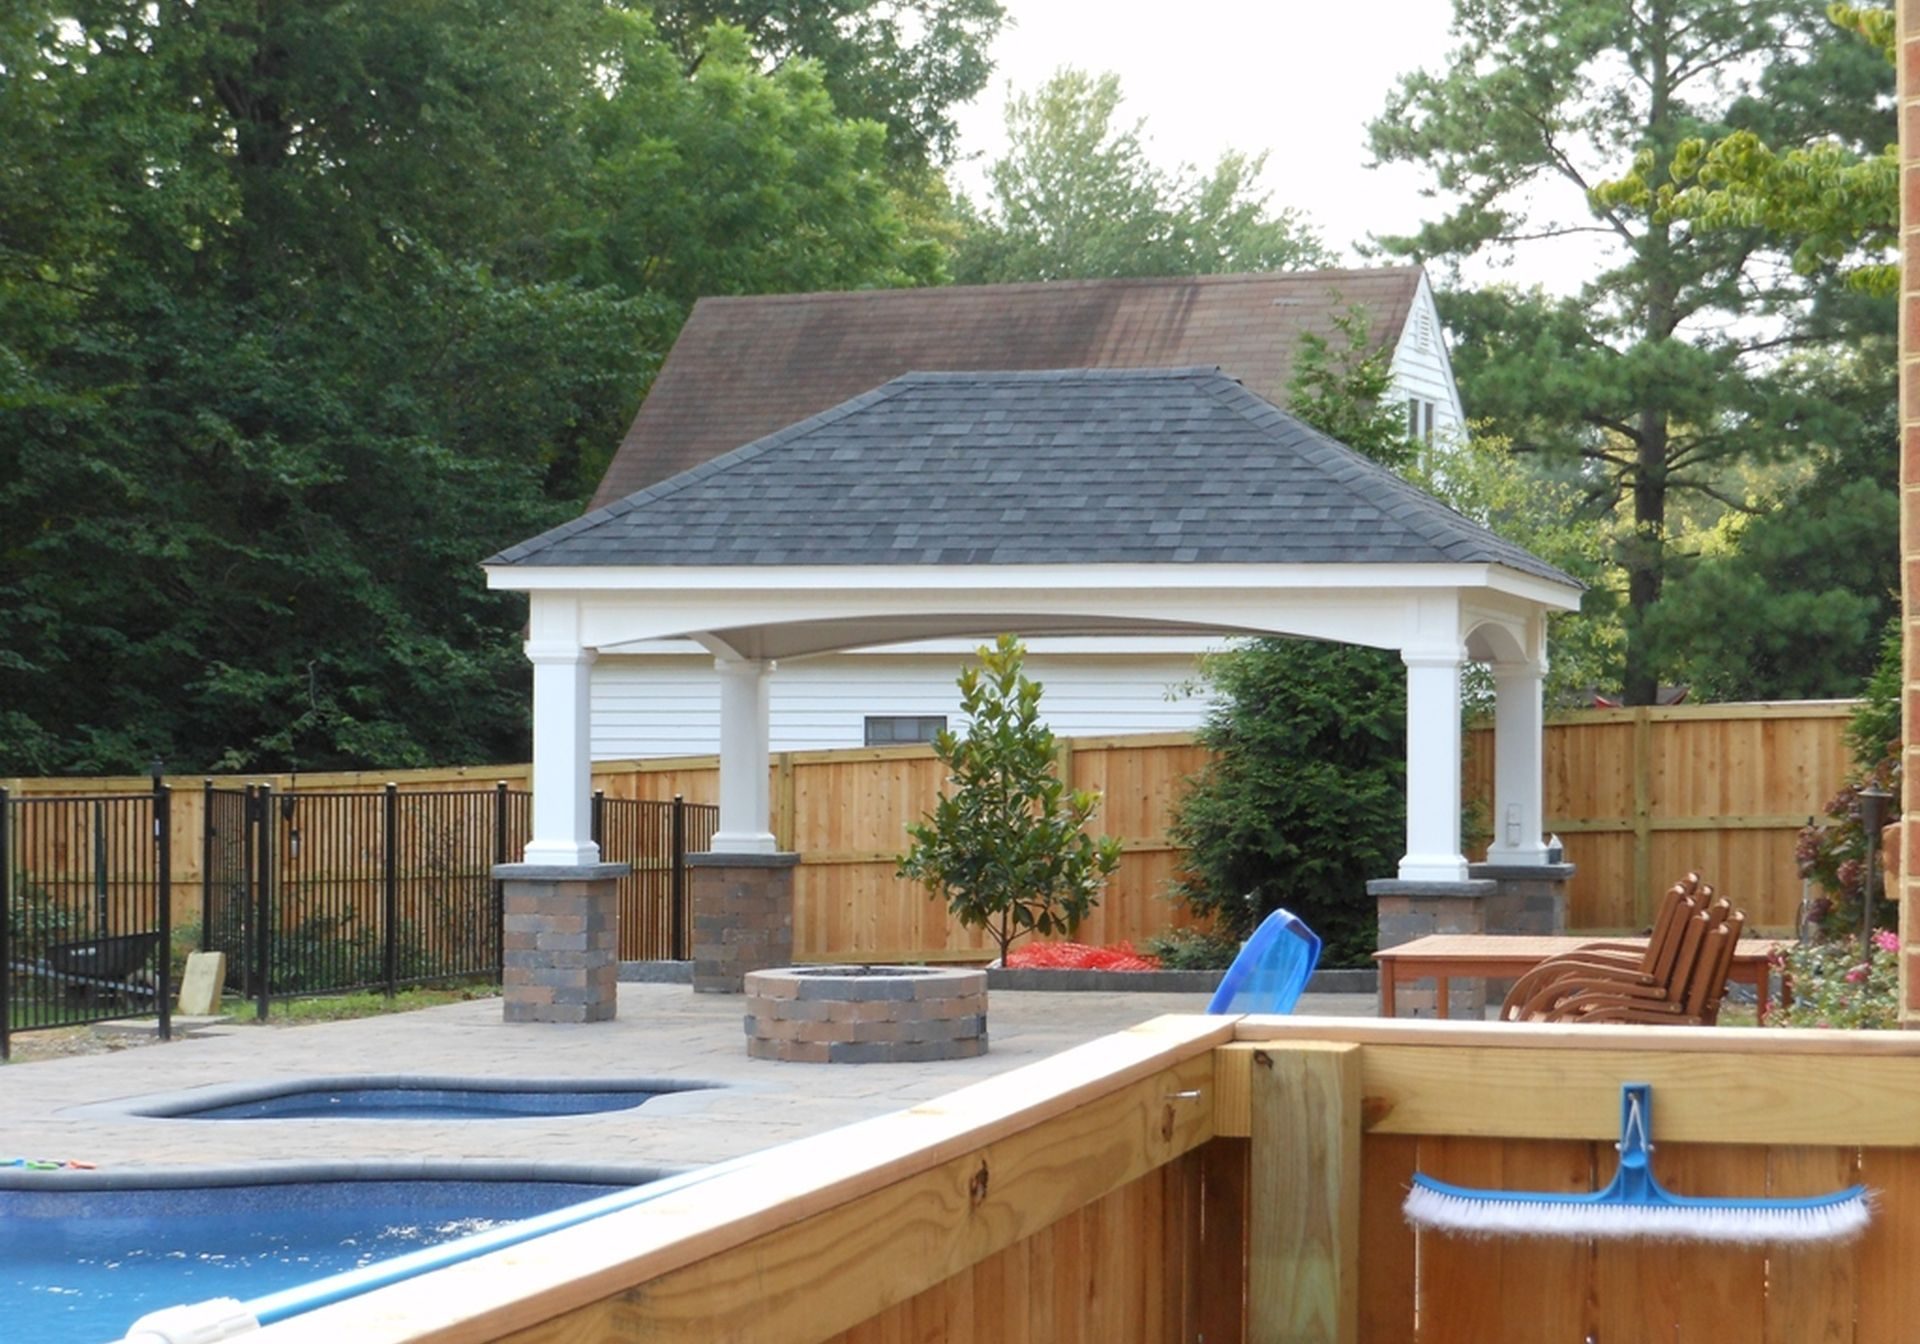 A backyard with a gazebo and a pool.